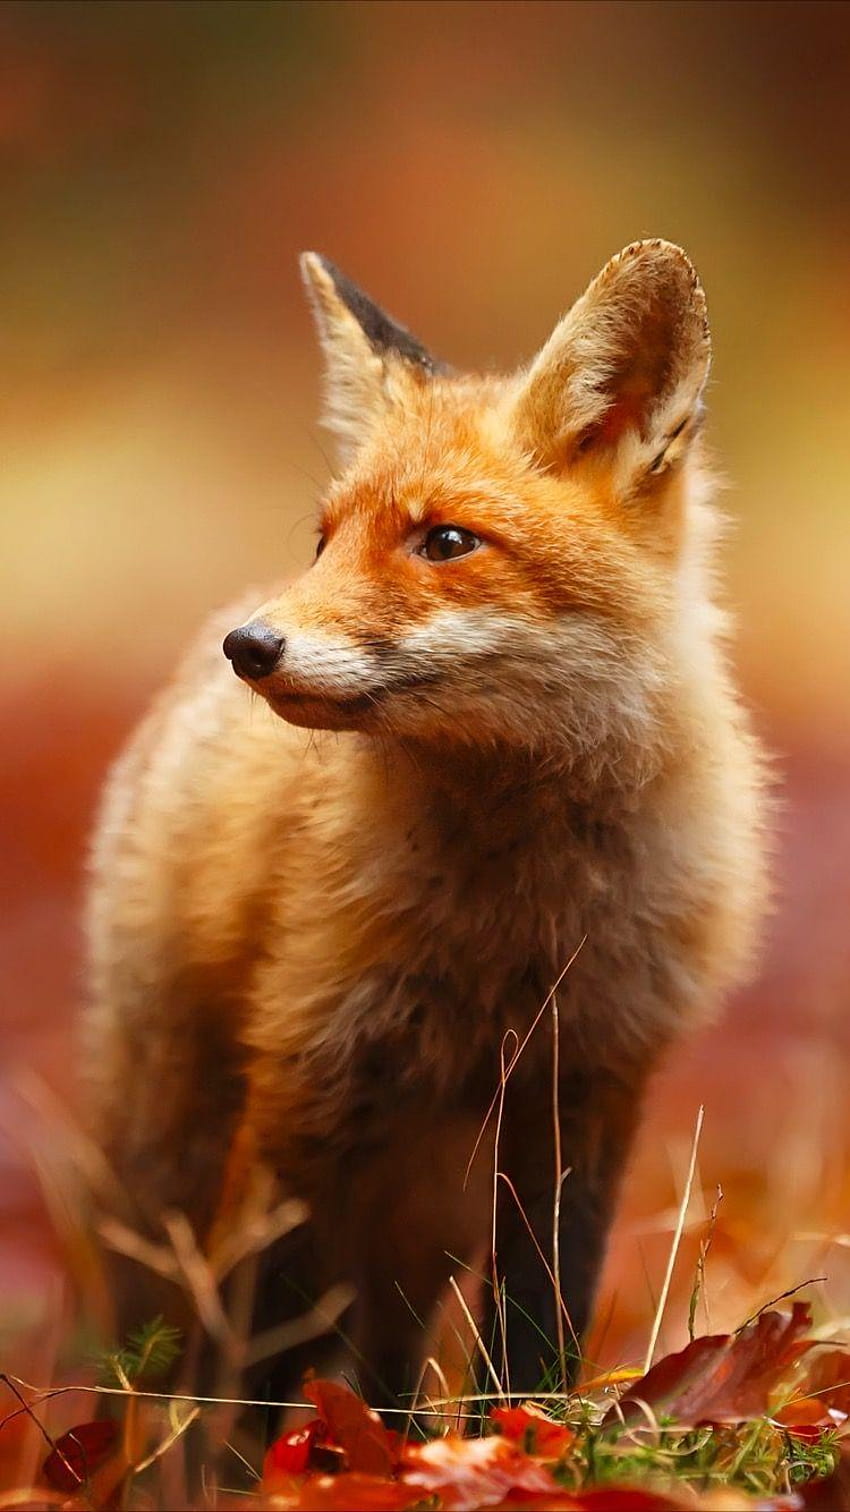 Wallpaper wildlife meadow red fox animal desktop wallpaper hd image  picture background e1c35e  wallpapersmug